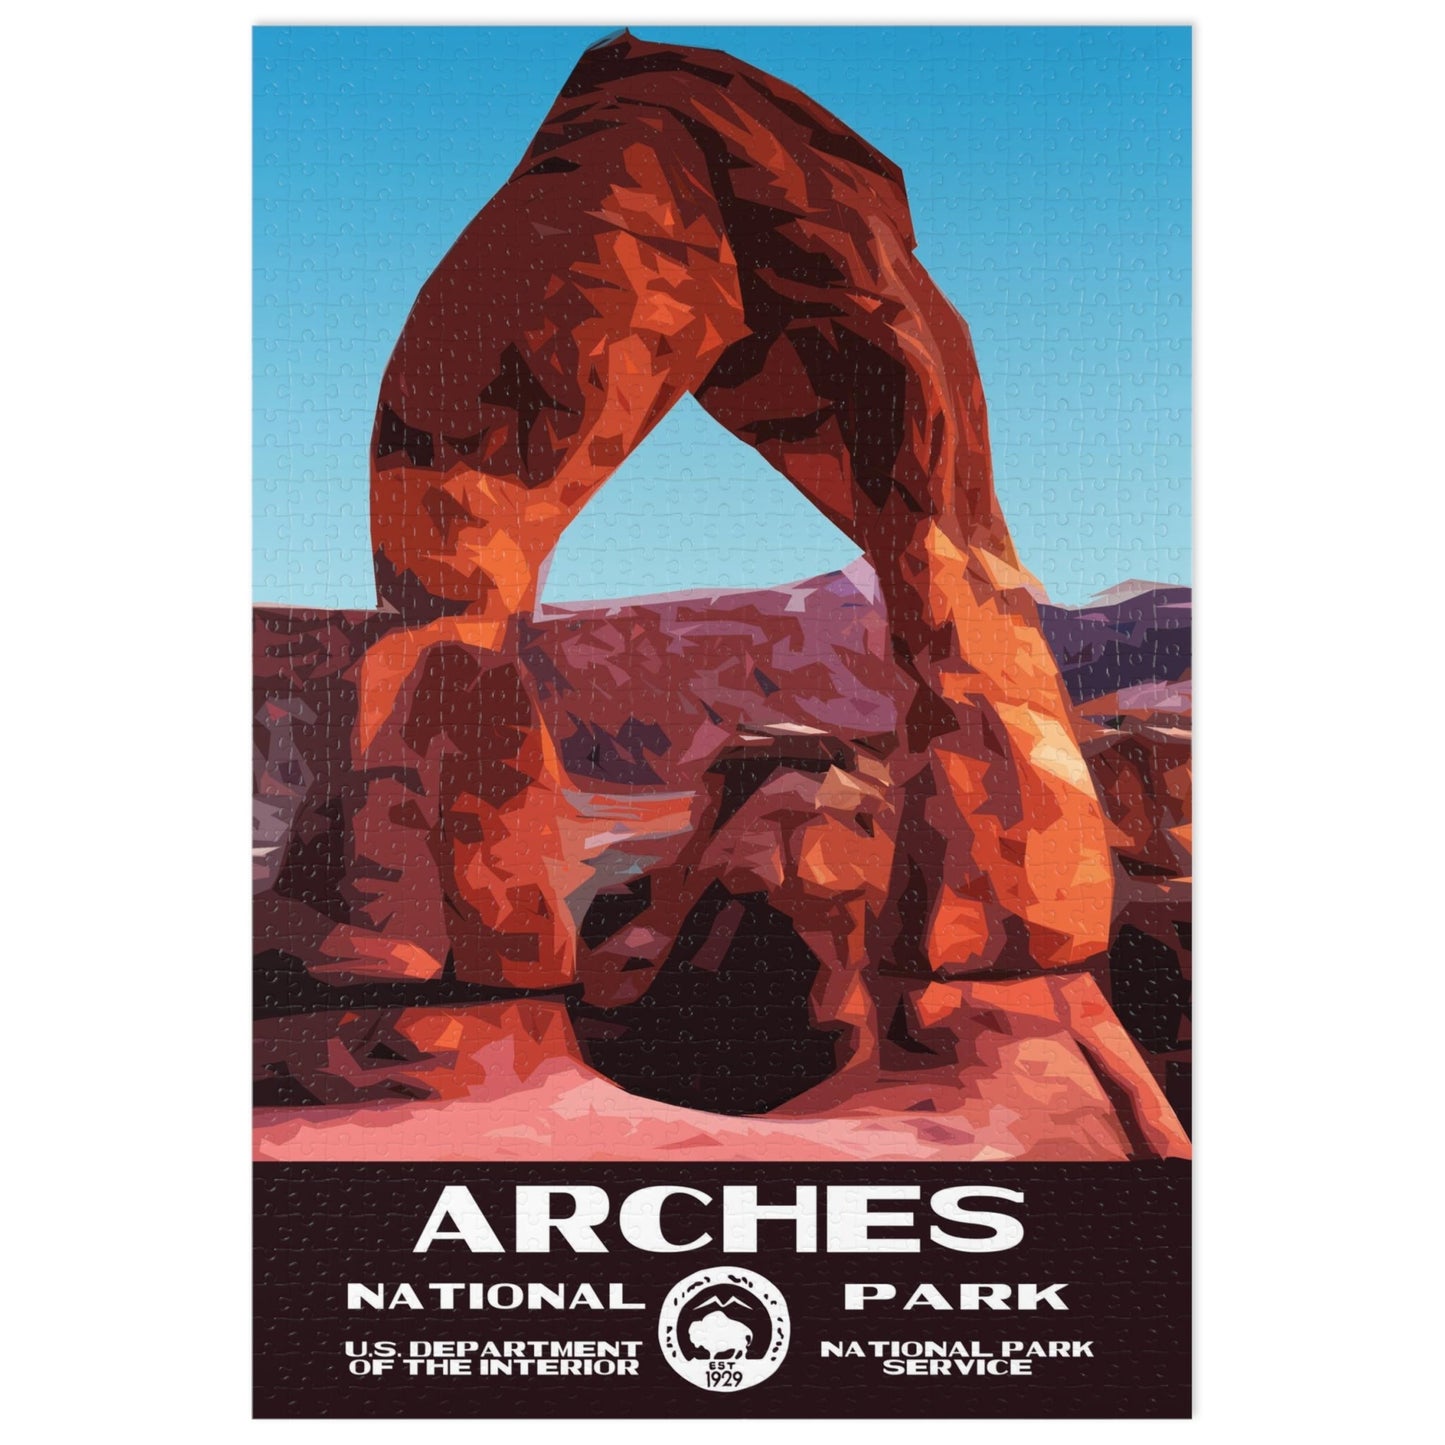 Arches National Park Jigsaw Puzzle - 1000 Pieces